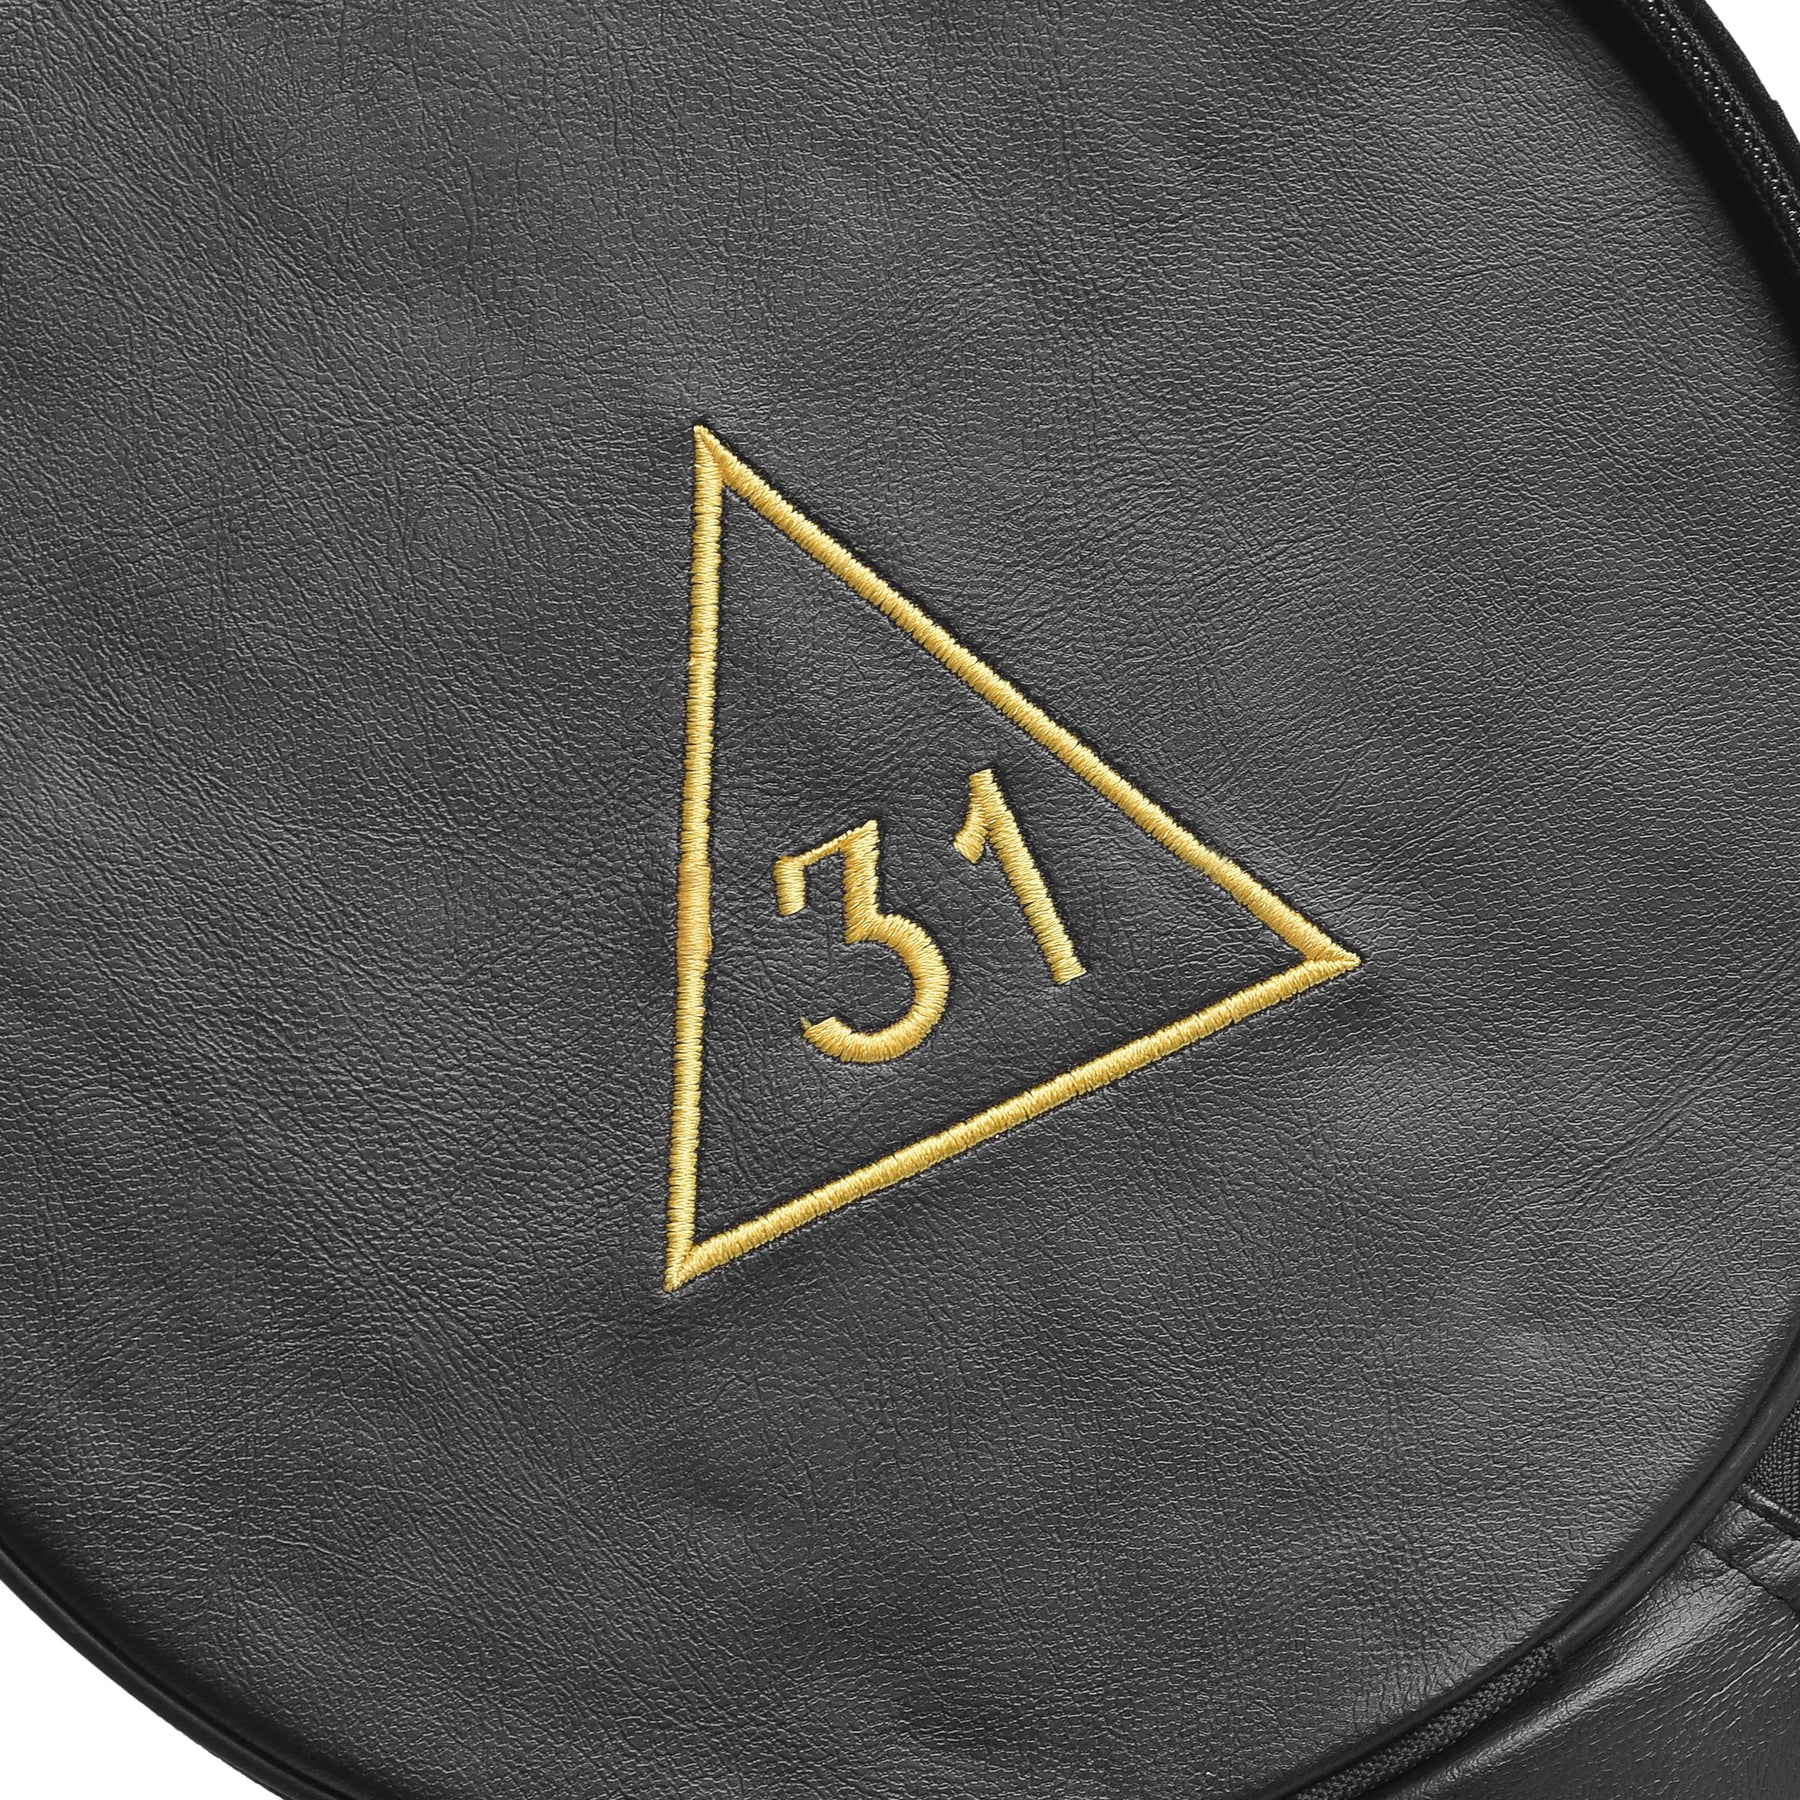 31st Degree Scottish Rite Crown Cap Case - Black Leather And Gold - Bricks Masons